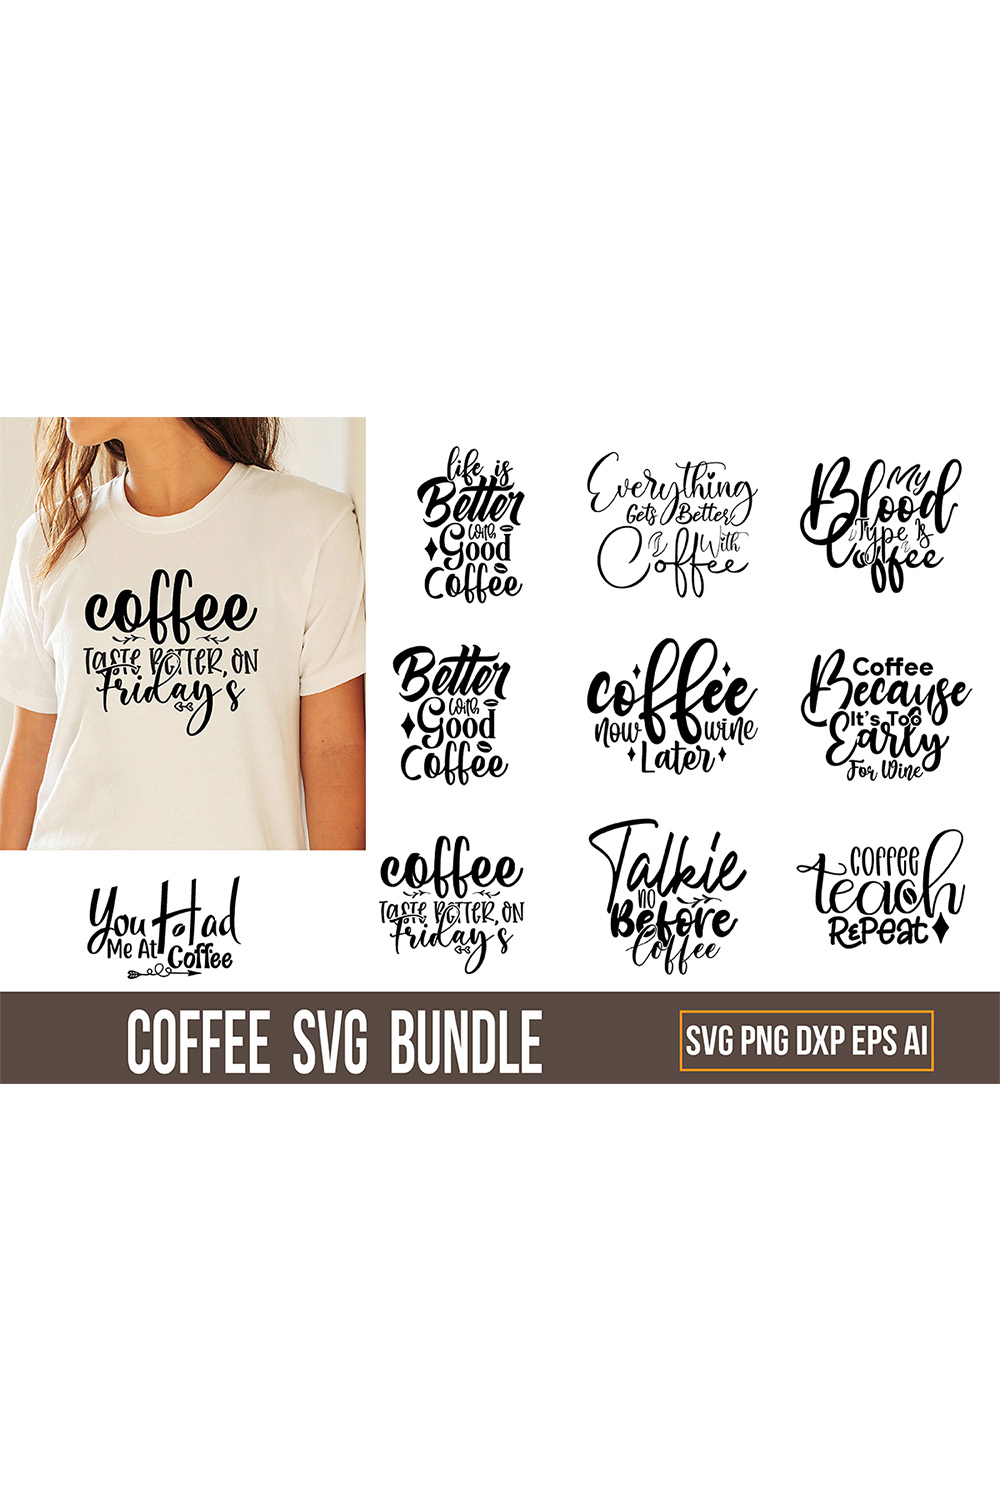 T-shirt Typography Coffee SVG Design Bundle pinterest image.